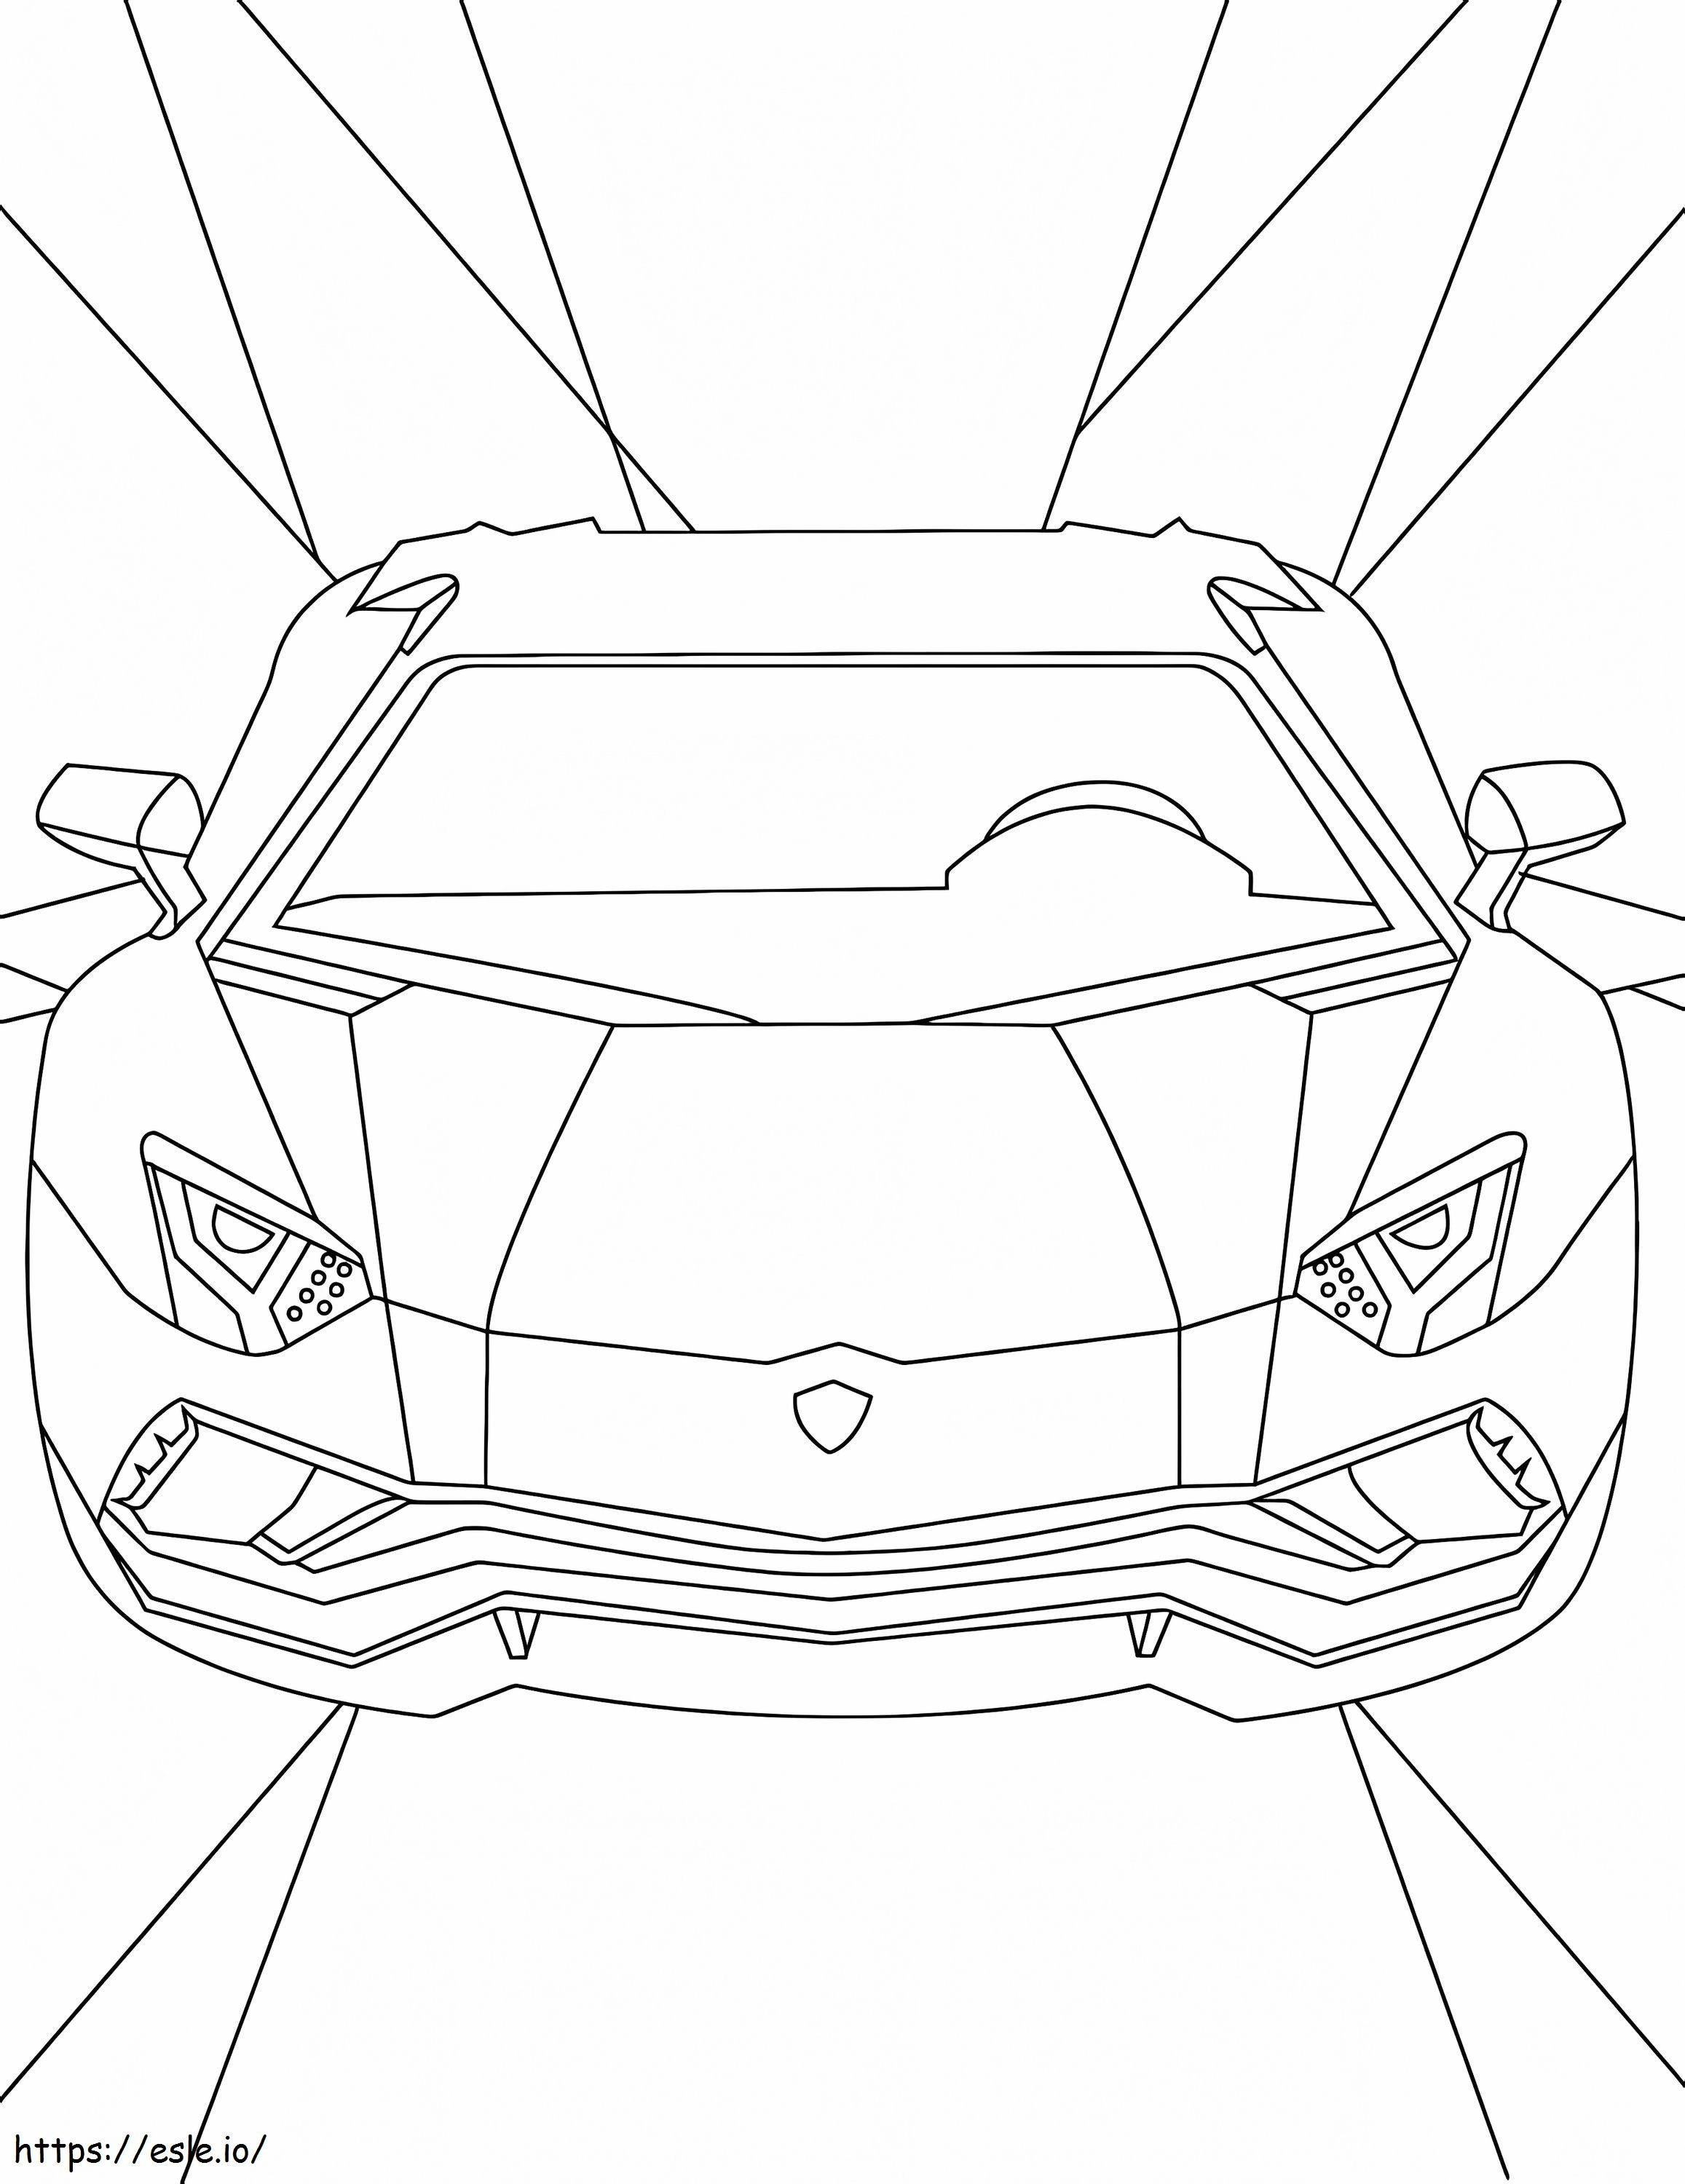 Coloriage Lamborghini gratuit à imprimer dessin